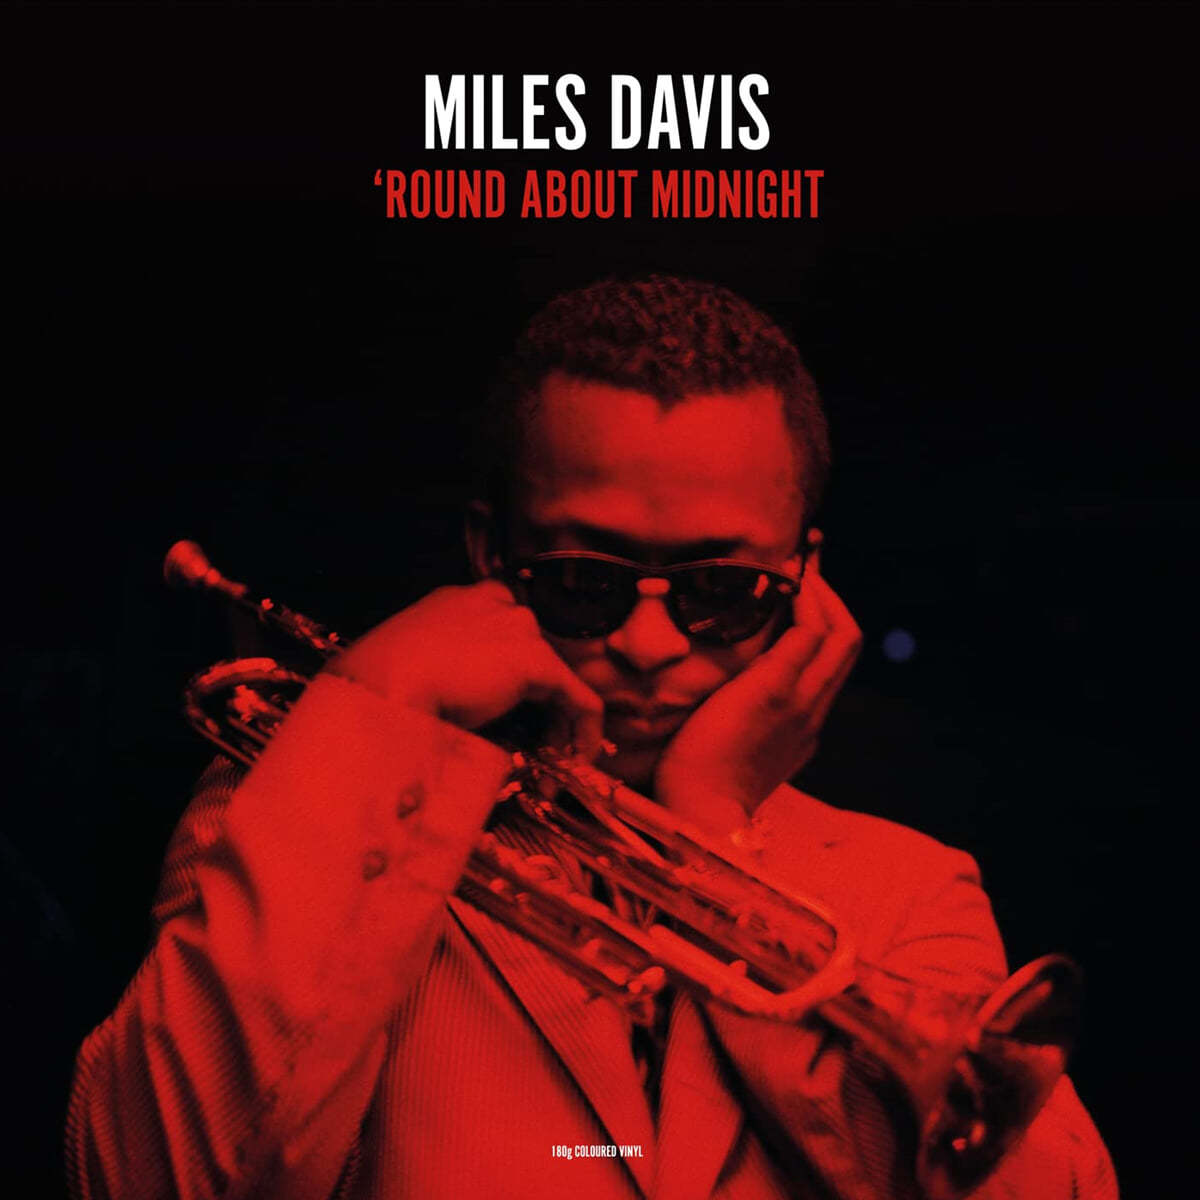 Miles Davis (마일즈 데이비스) - Round About Midnight [레드 컬러 LP] 